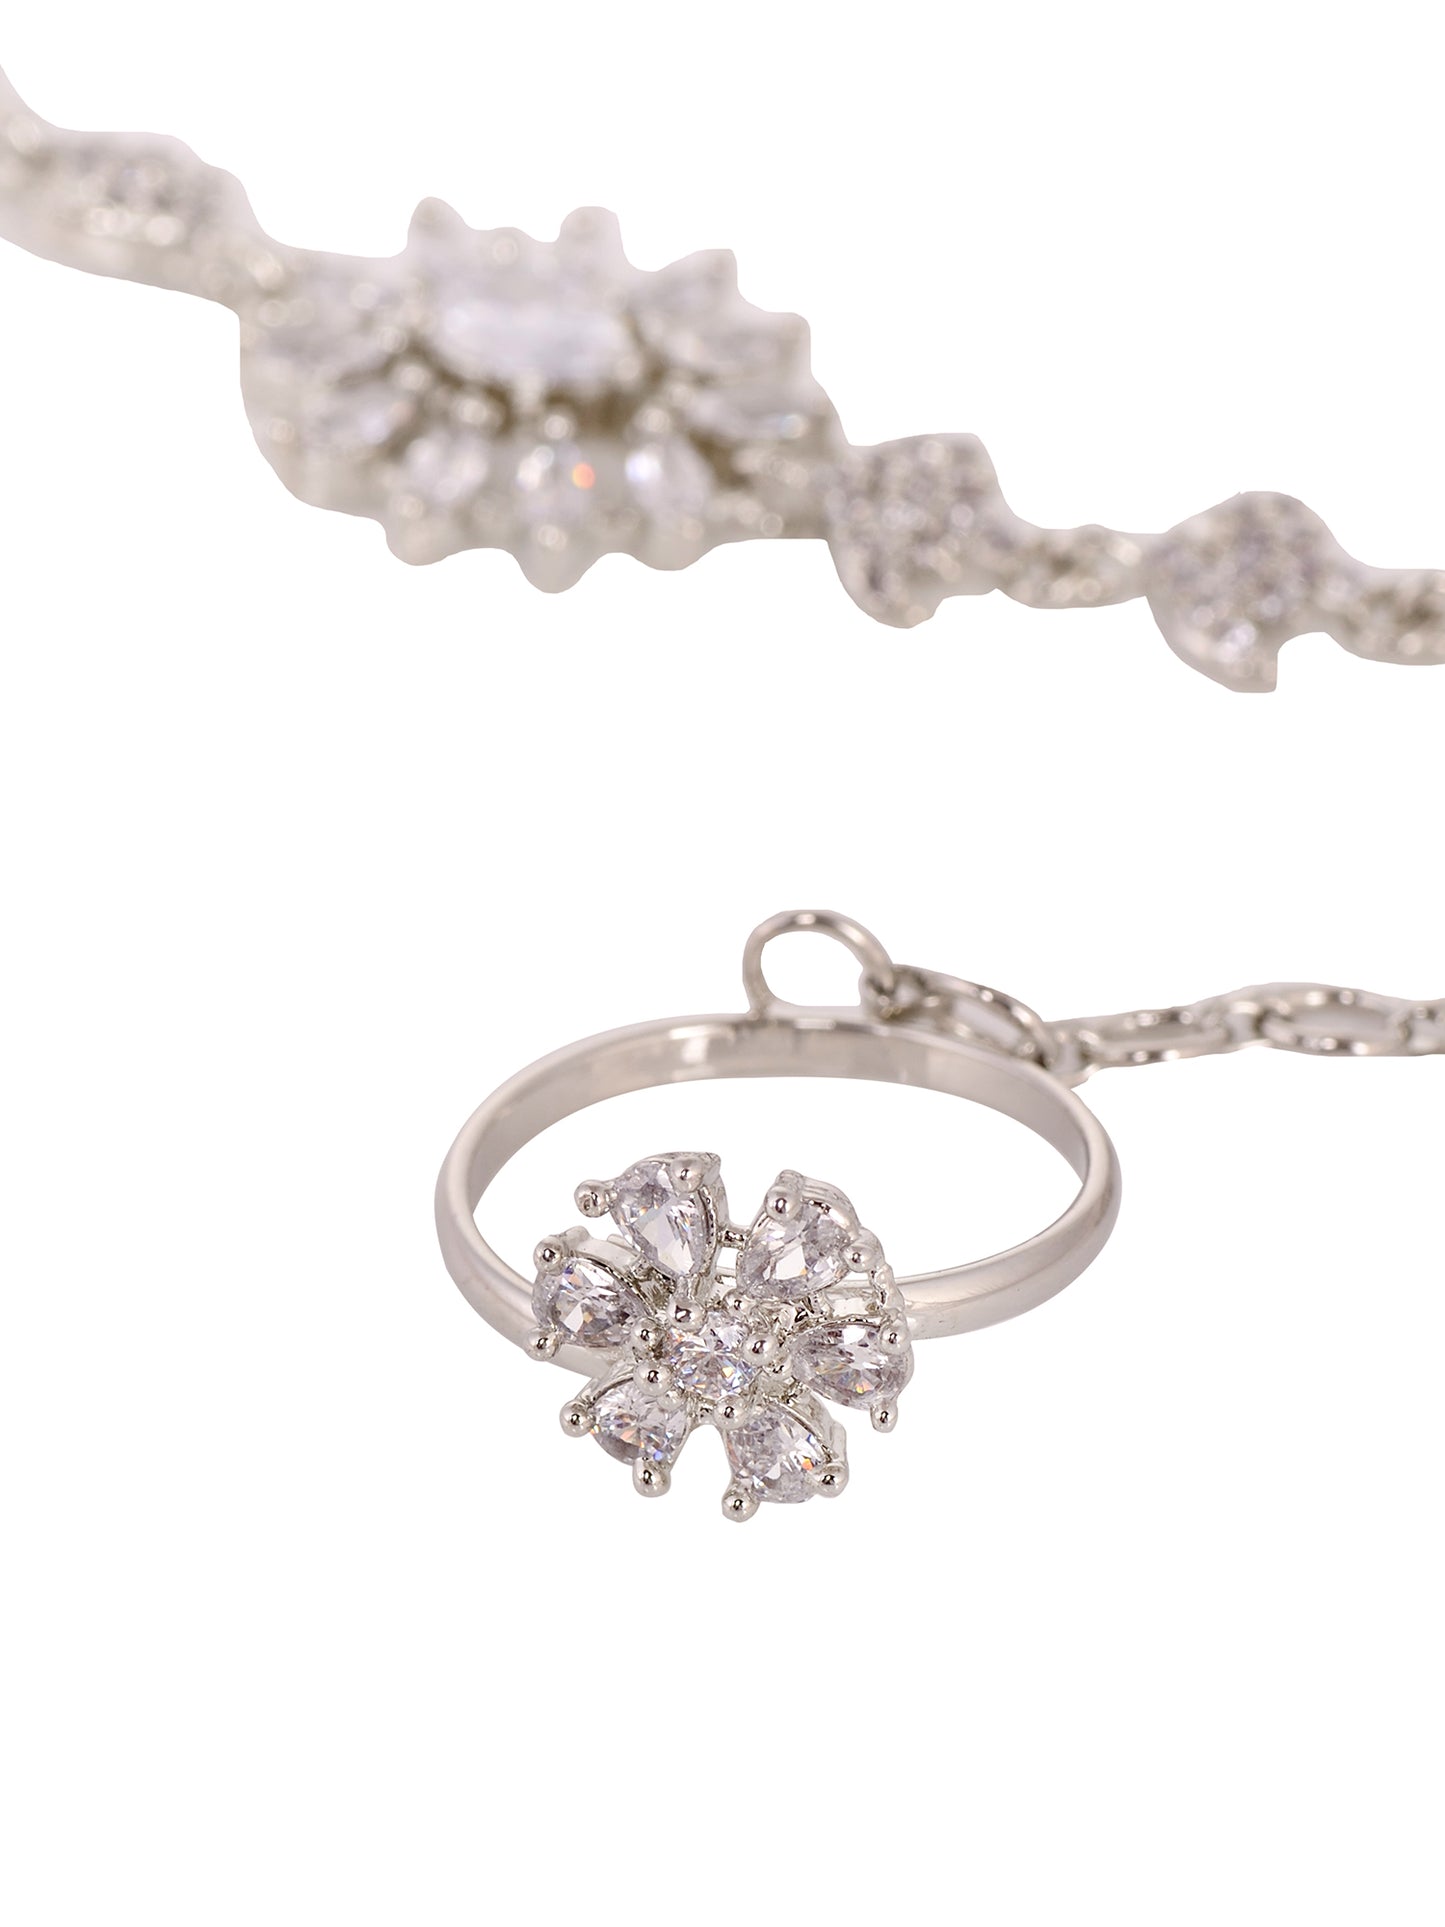 Silver Plated White AD studded Modern Wraparound Ring Bracelet